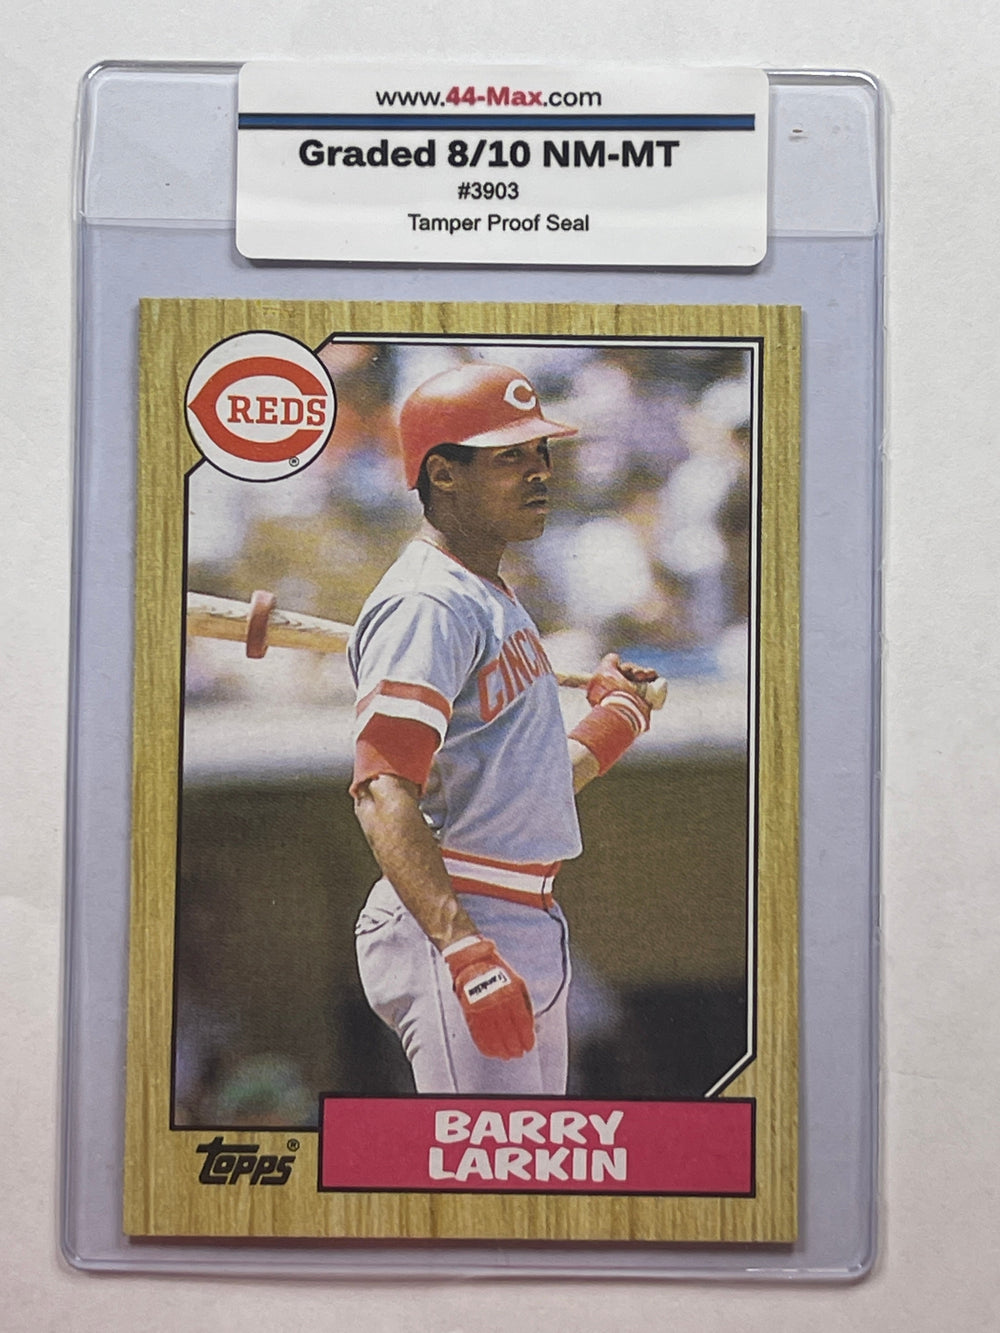 Barry Larkin Topps Baseball Rookie Card. 44-Max 8/10 NM-MT #3903